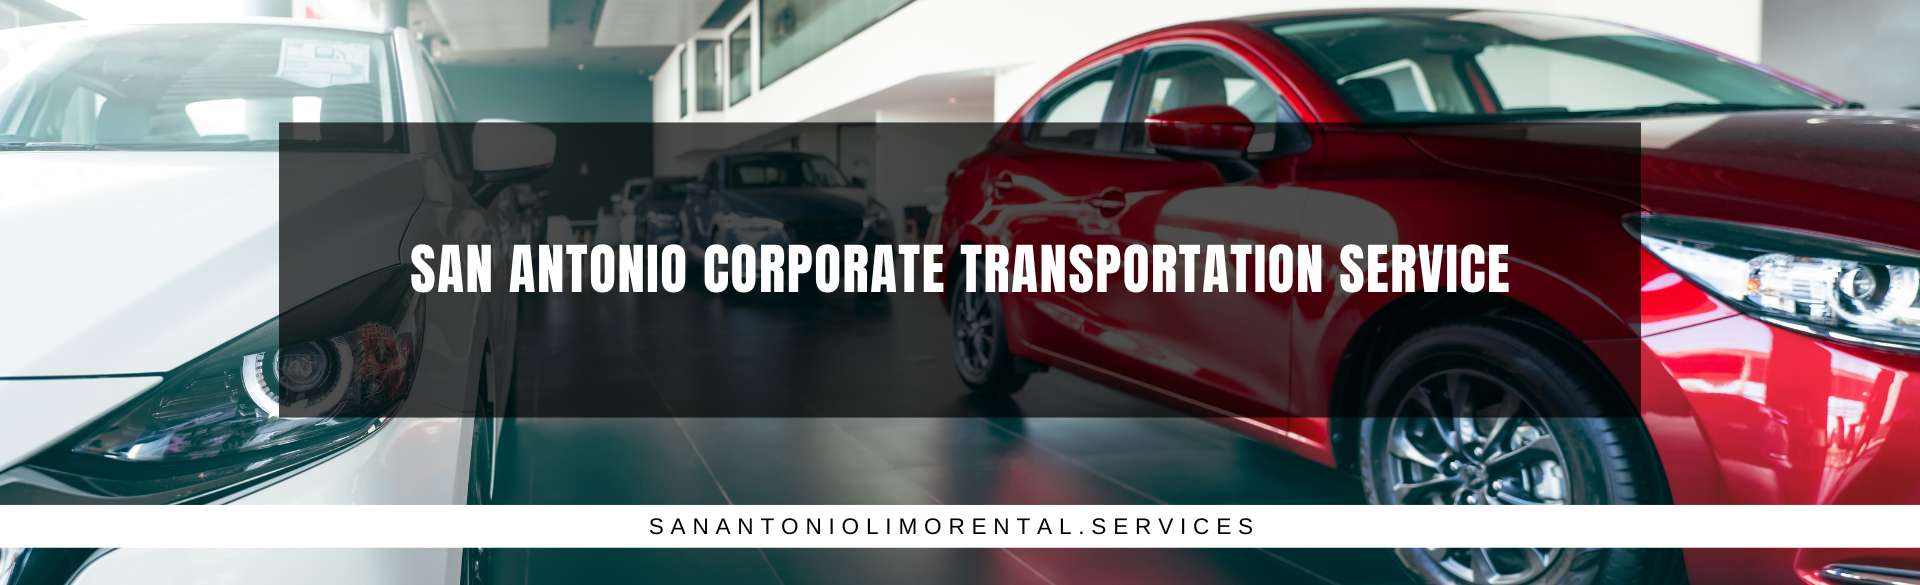 San Antonio Corporate Transportation Service